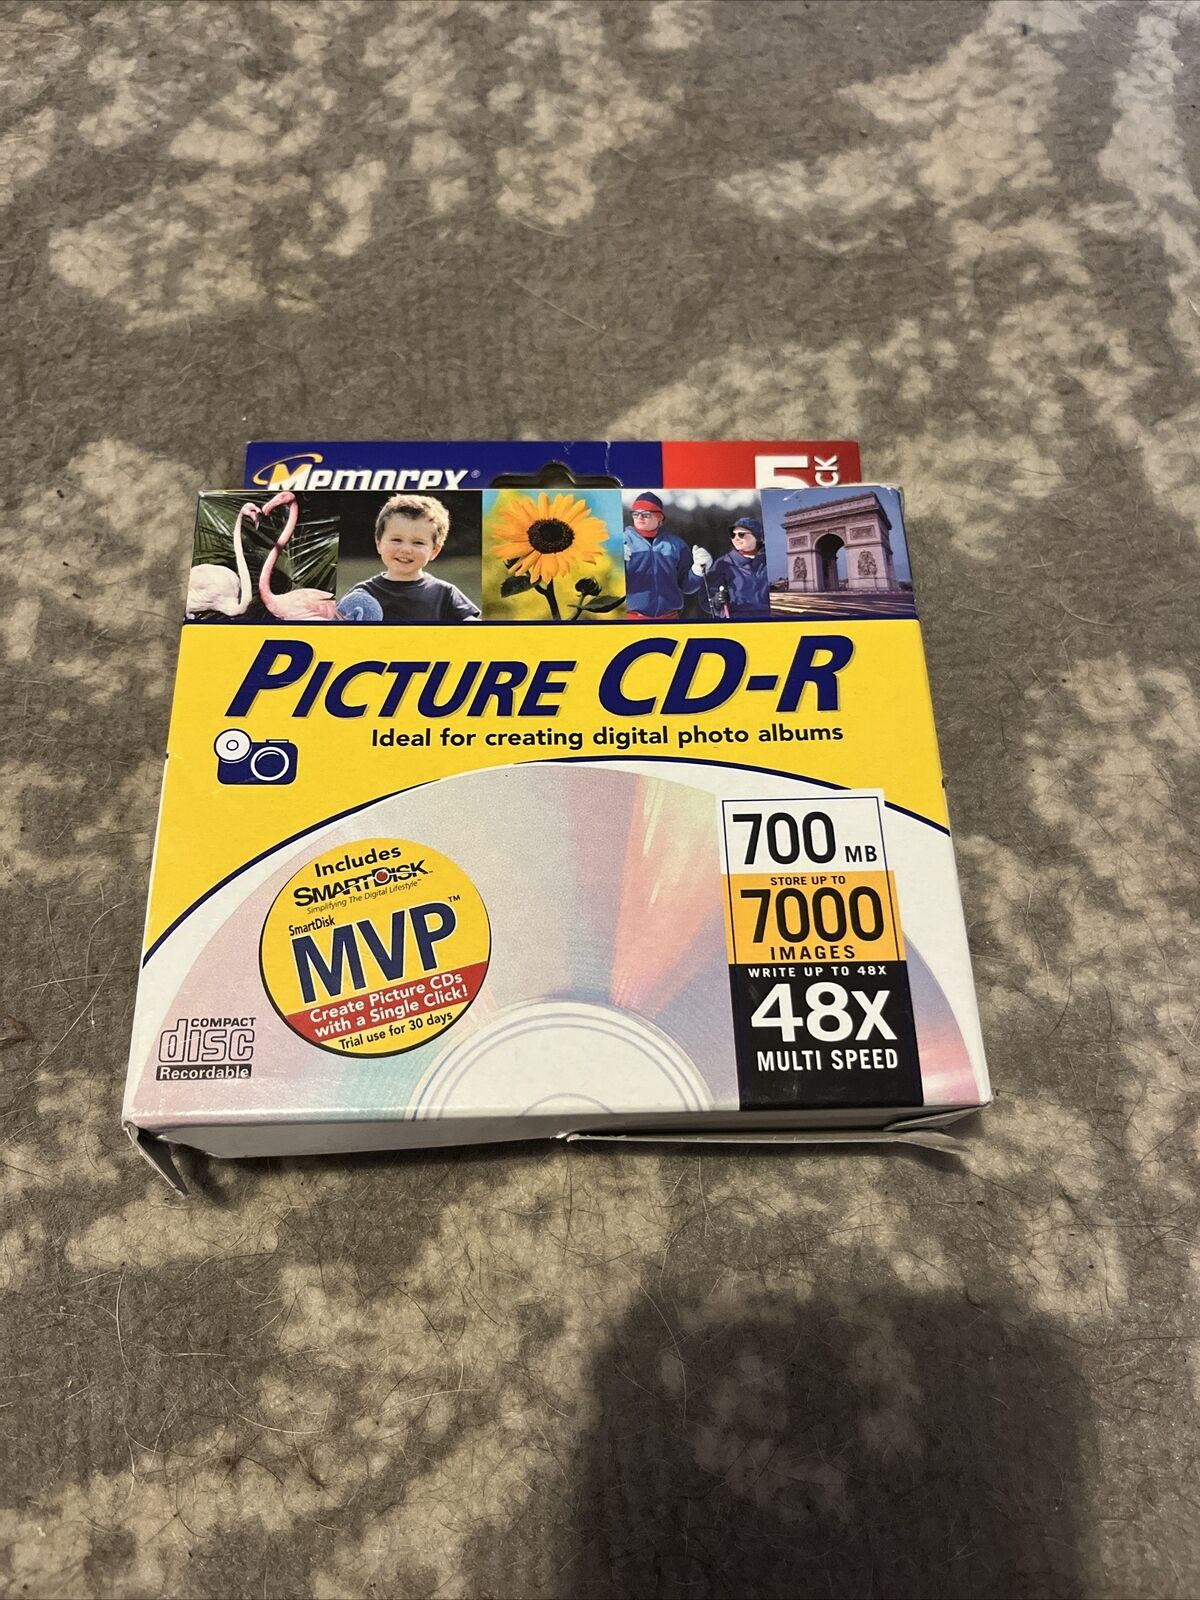 Picture CD-R, 700MB, 48x Multi Speed, New In Package Memorex 5 Pack Vintage NOS